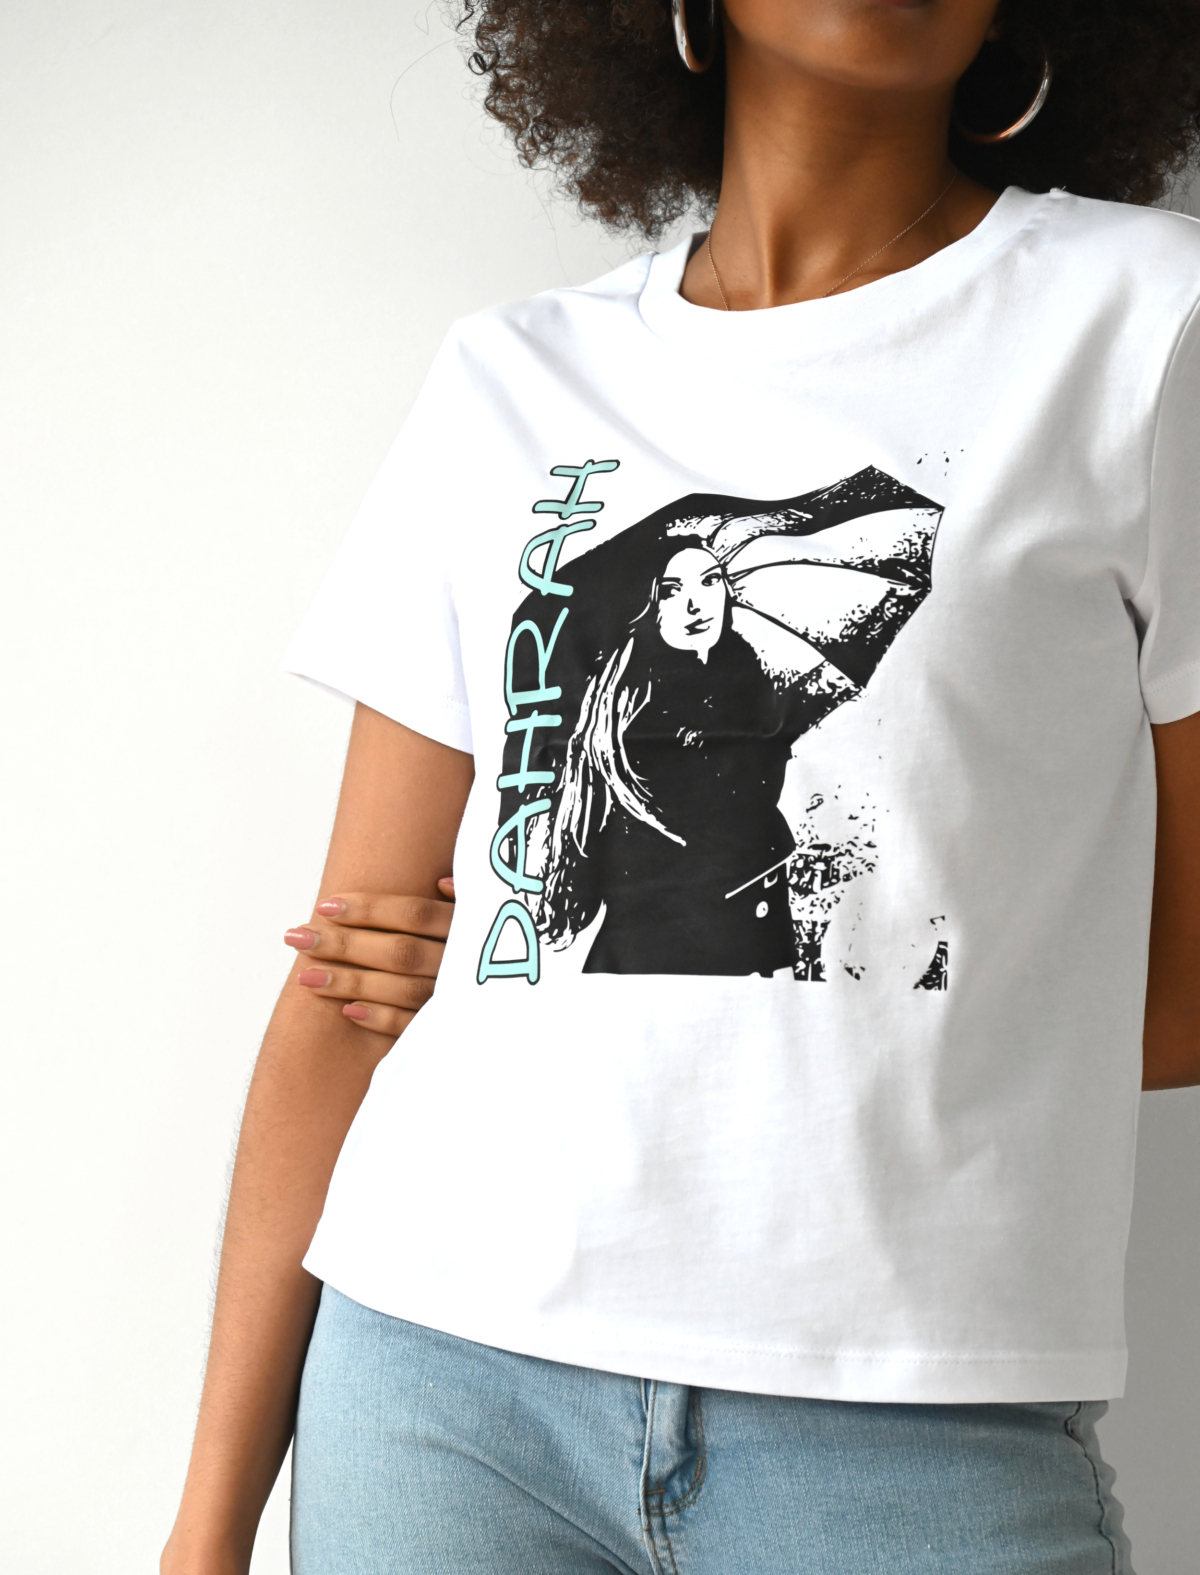 Organic t-SHIRT with print of an elegant lady with umbrella by Dahrah Darah Fashion.